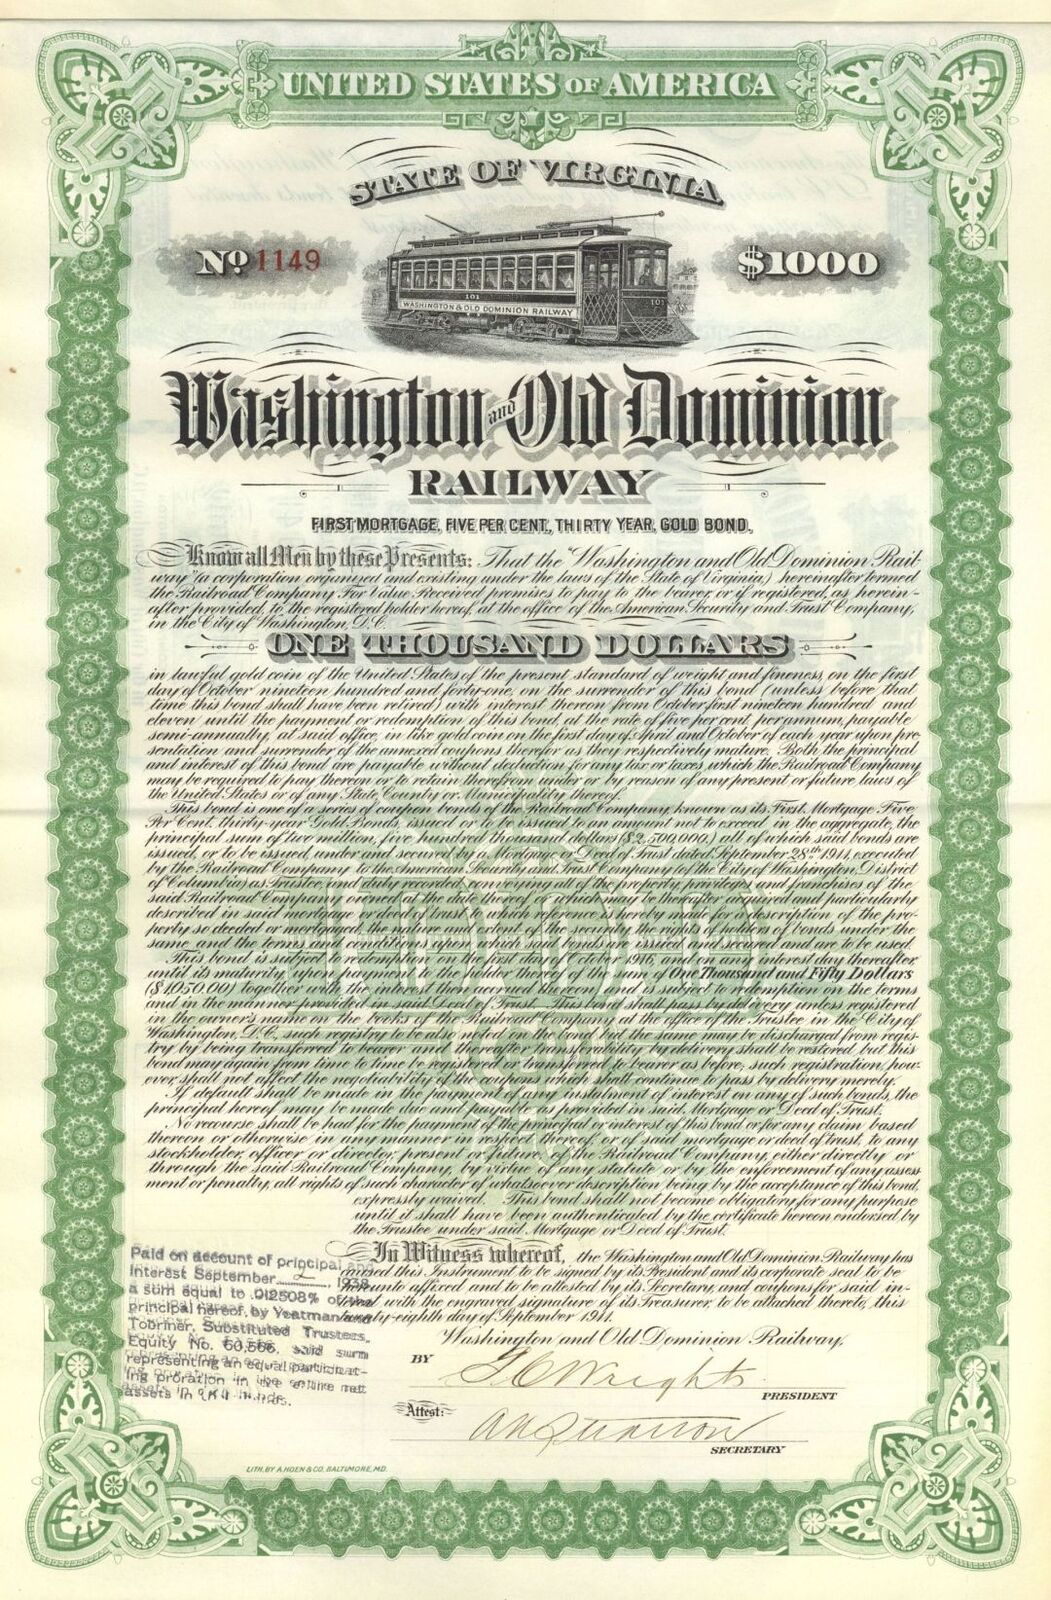 Washington and Old Dominion Railway - 1911 dated $1,000 Uncanceled Railroad 30 Y